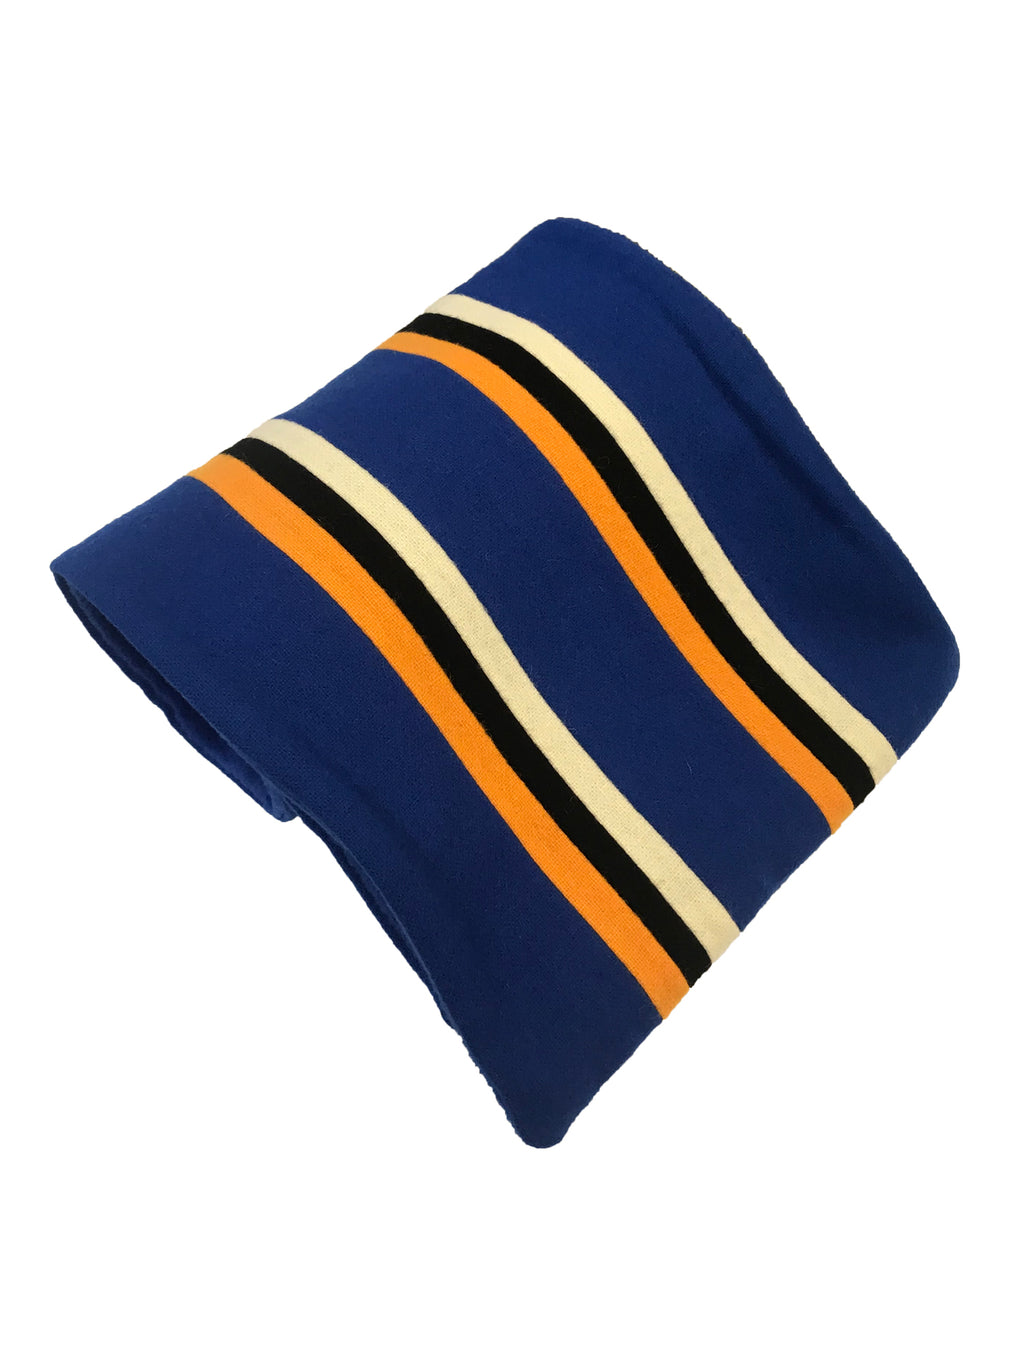 st-columbanus-college-scarf